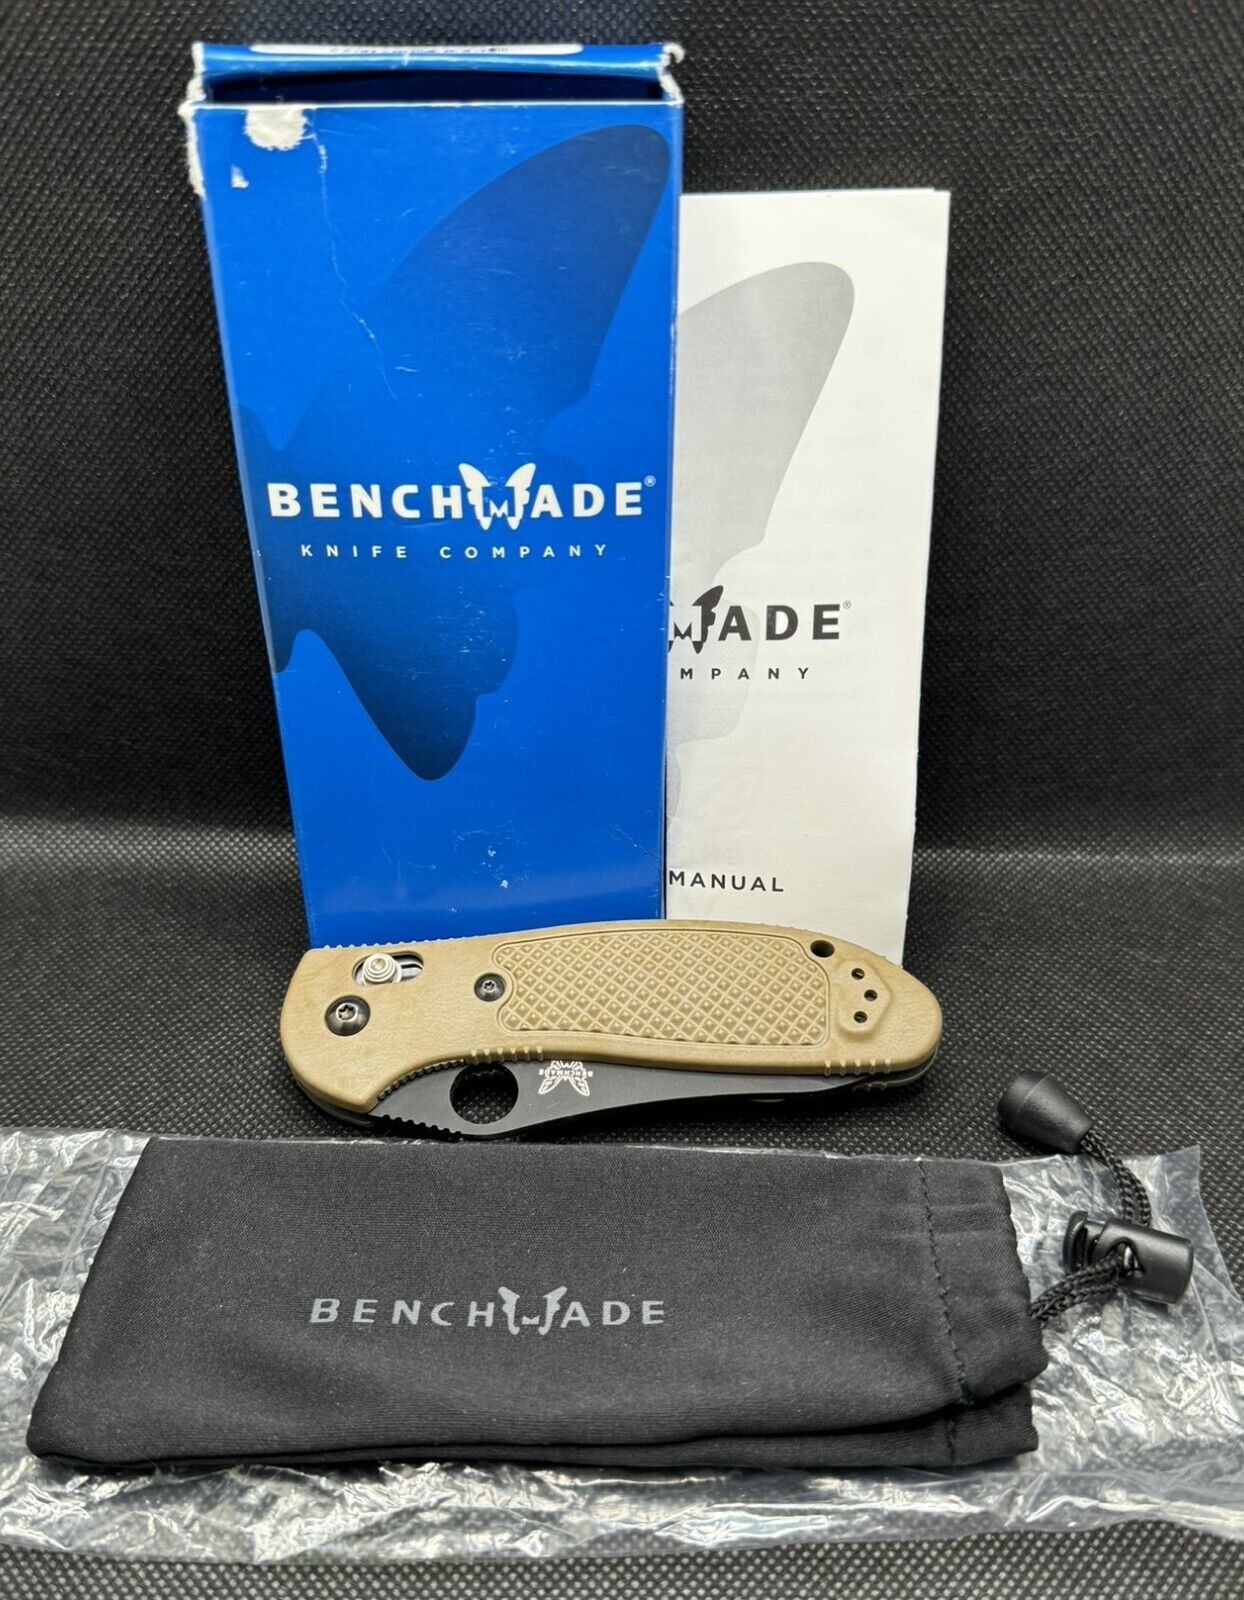 BENCHMADE 550BKHG GRIPTILIAN KNIFE, 154CM Rare Military Issue with K on Blade